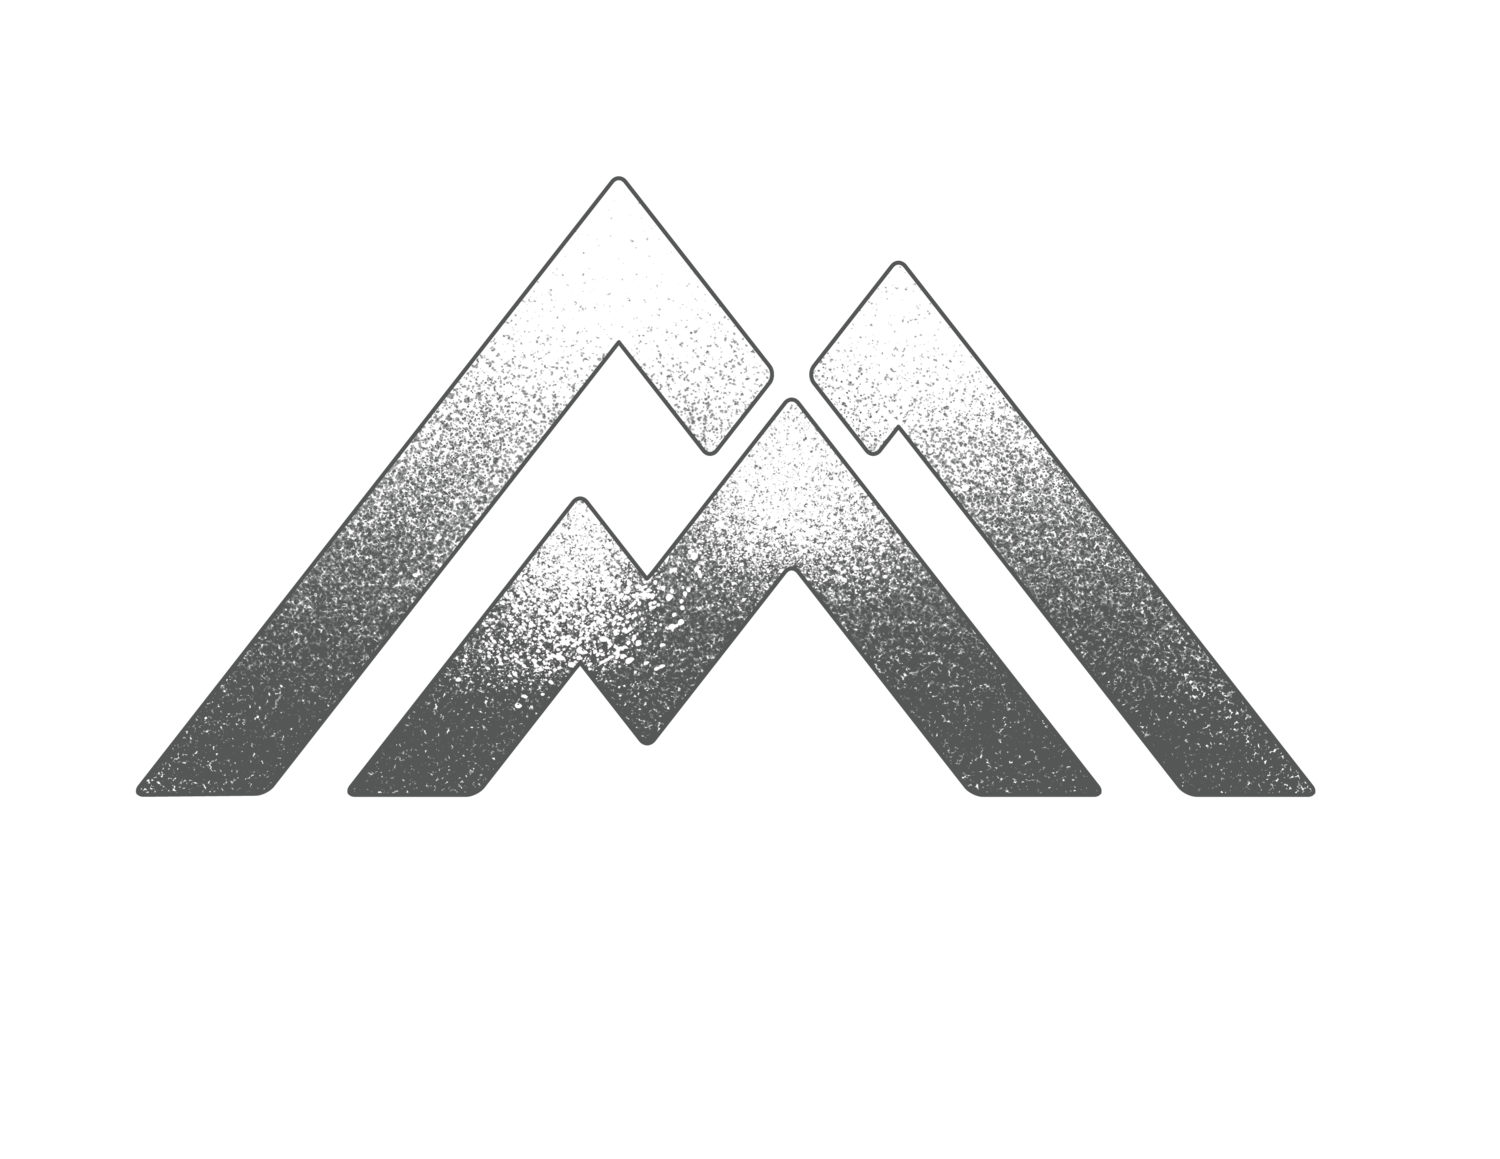 McGurn Media